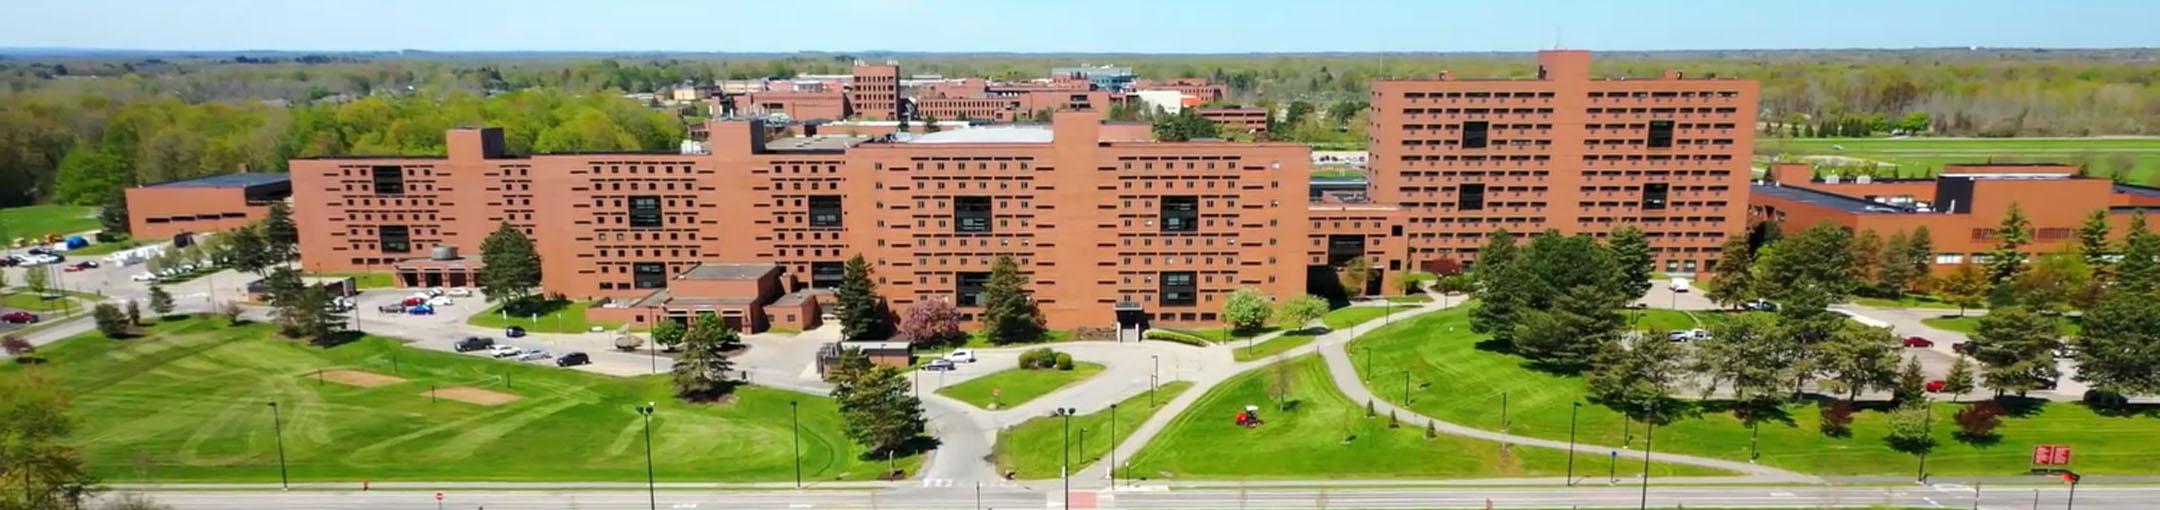 aerial view of brick residence hall buildings